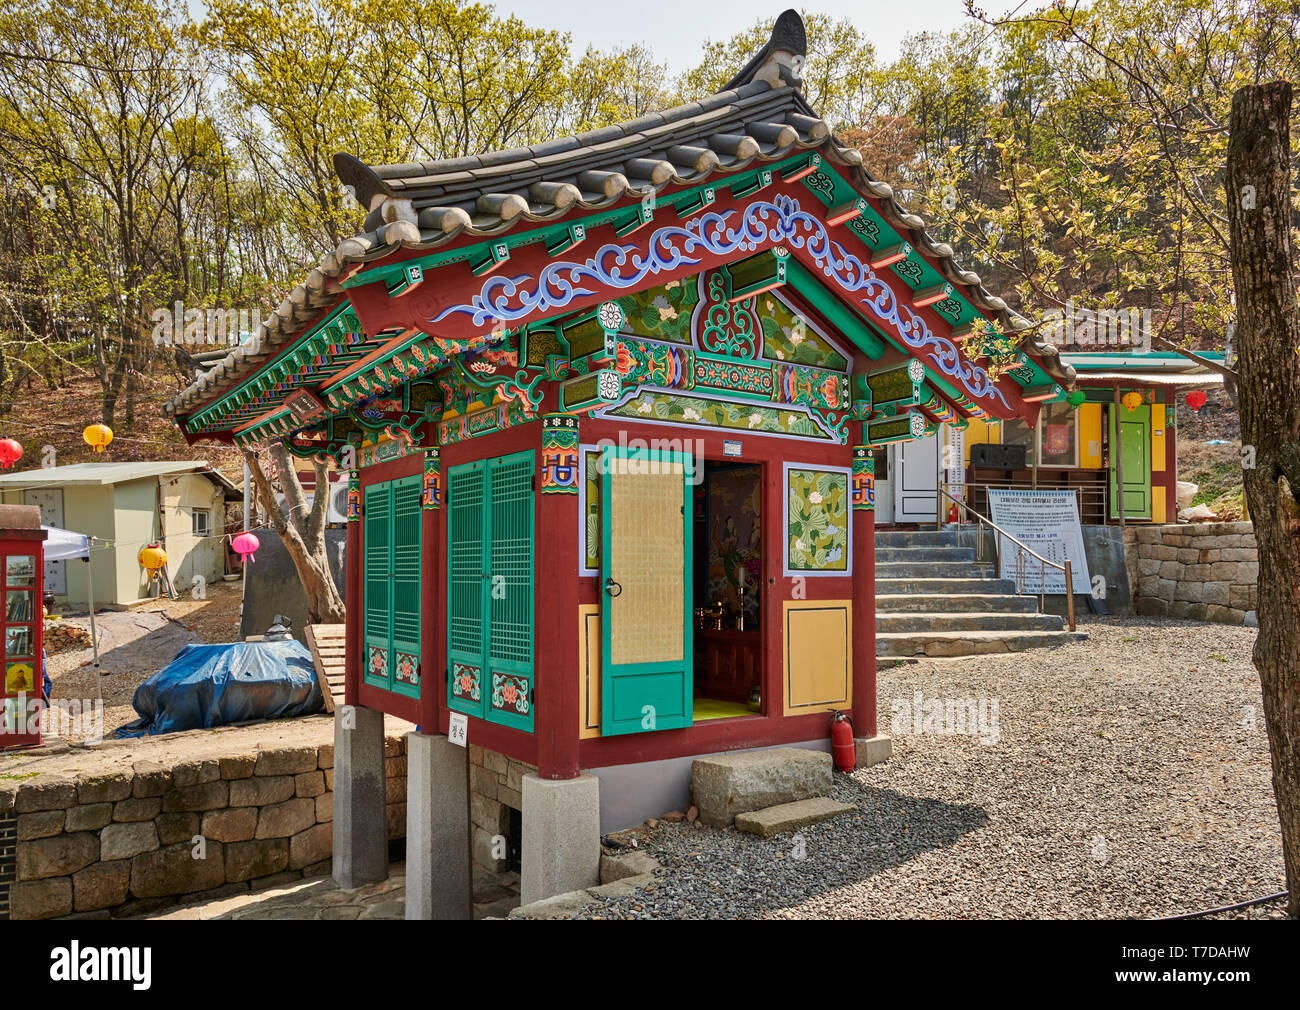 Baekunsa Temple or 'White Cloud Temple' on Yeonjondo Island, Incheon, South Korea Stock Photo